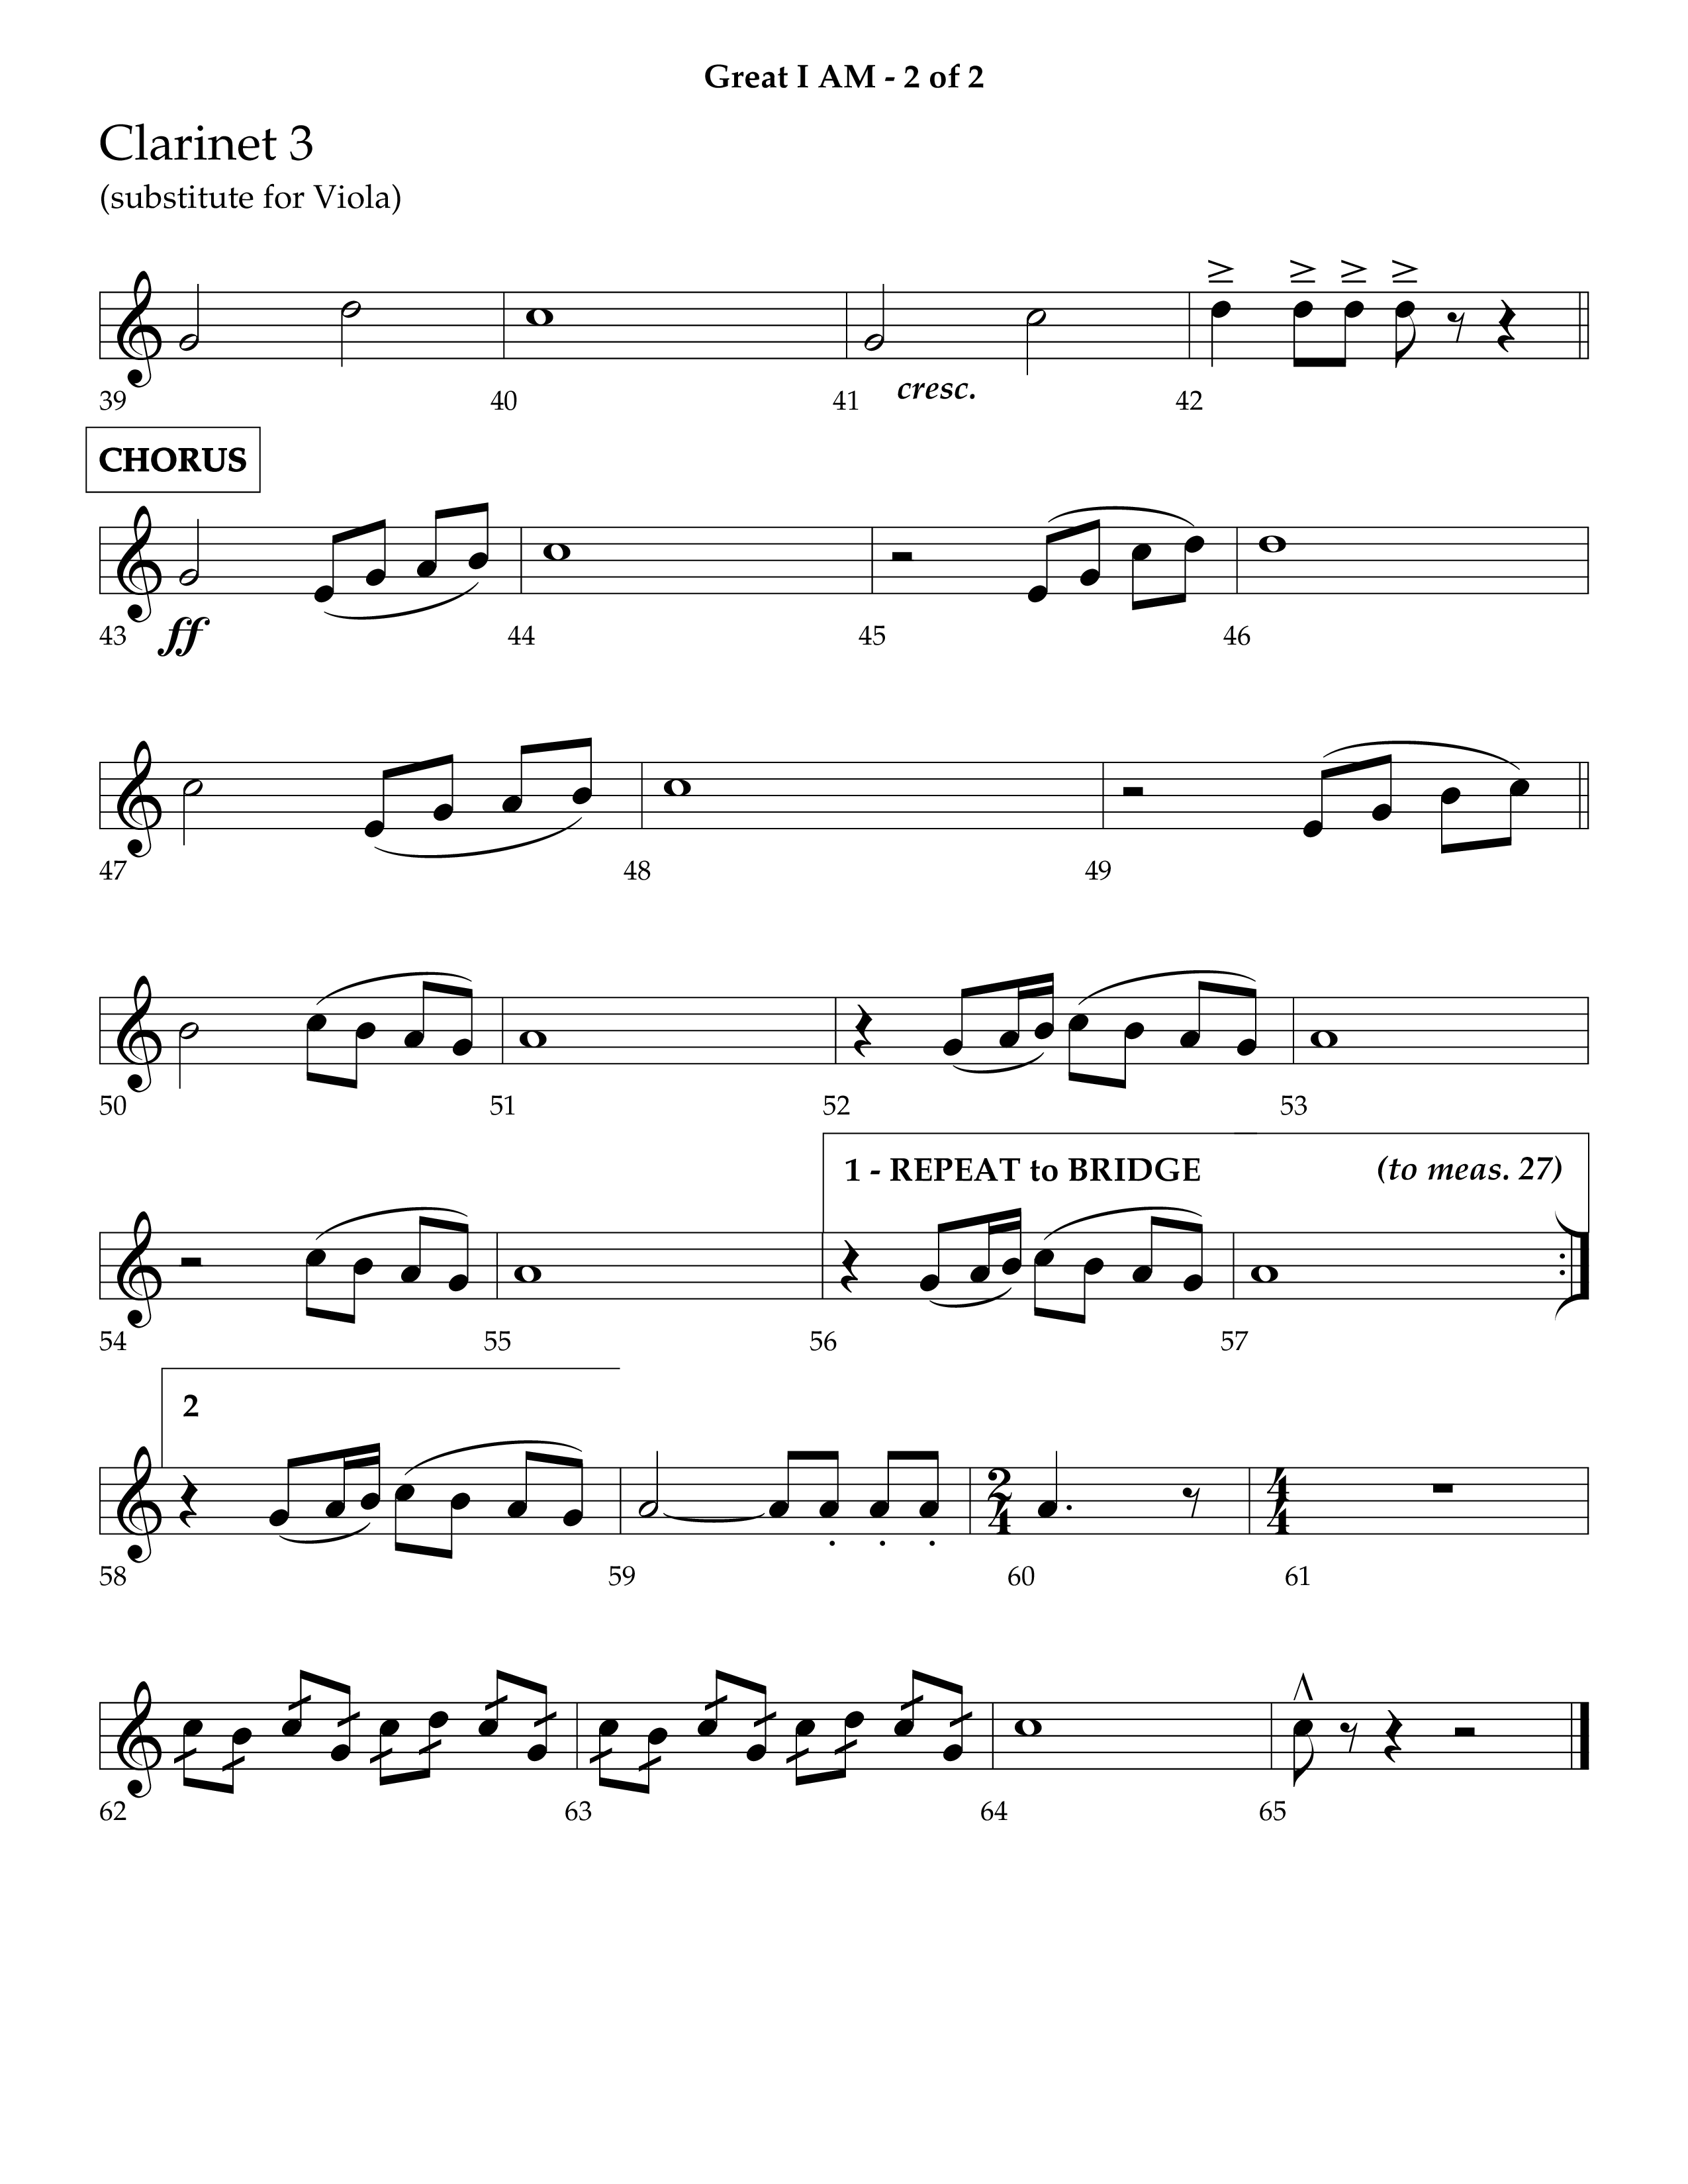 Great I Am (Choral Anthem SATB) Clarinet 3 (Lifeway Choral / Arr. Ken Barker / Orch. Dave Williamson)